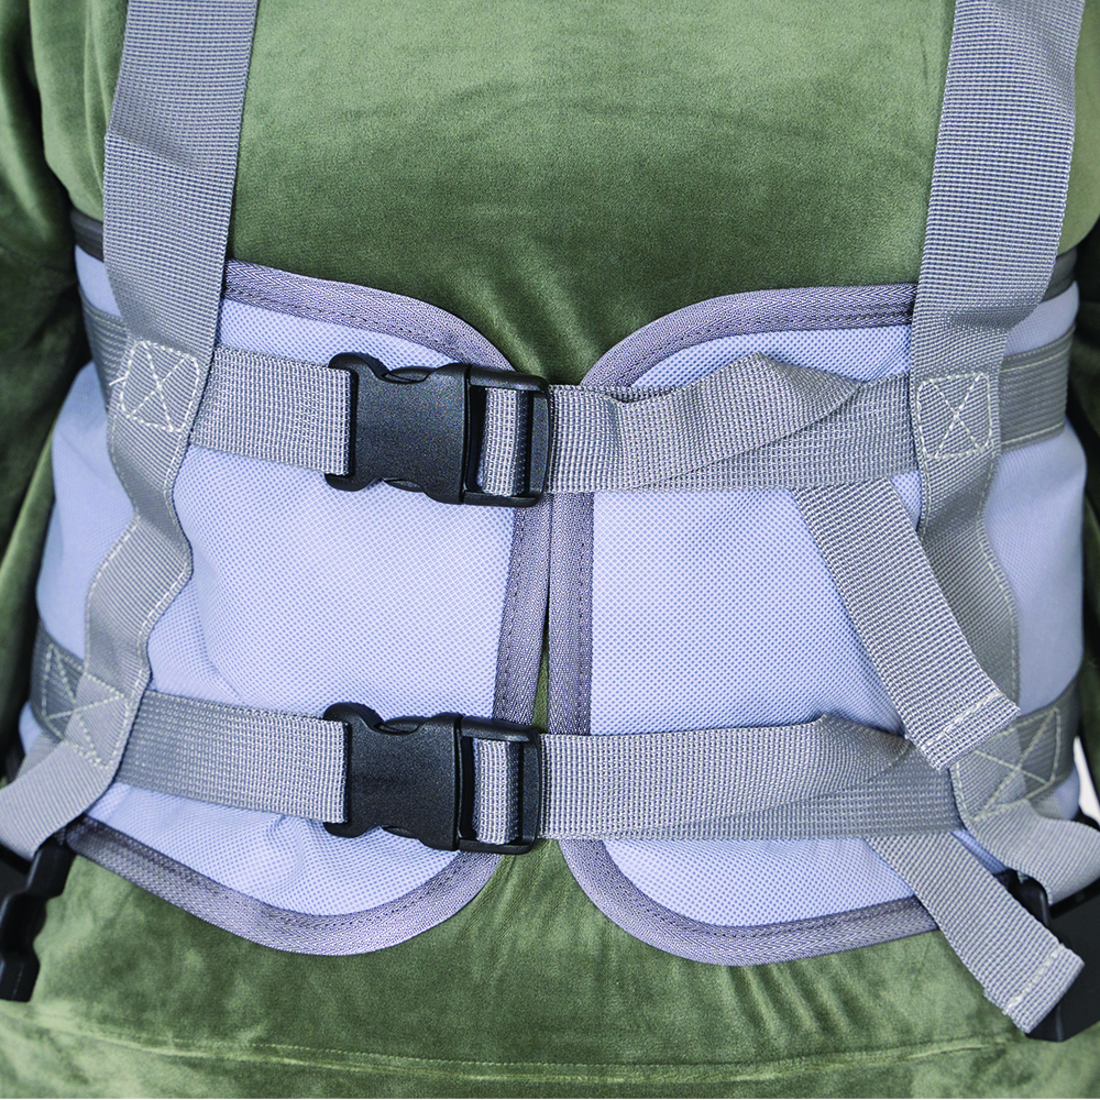 Molift UnoSling Ambulating Vest waistbelt.jpg